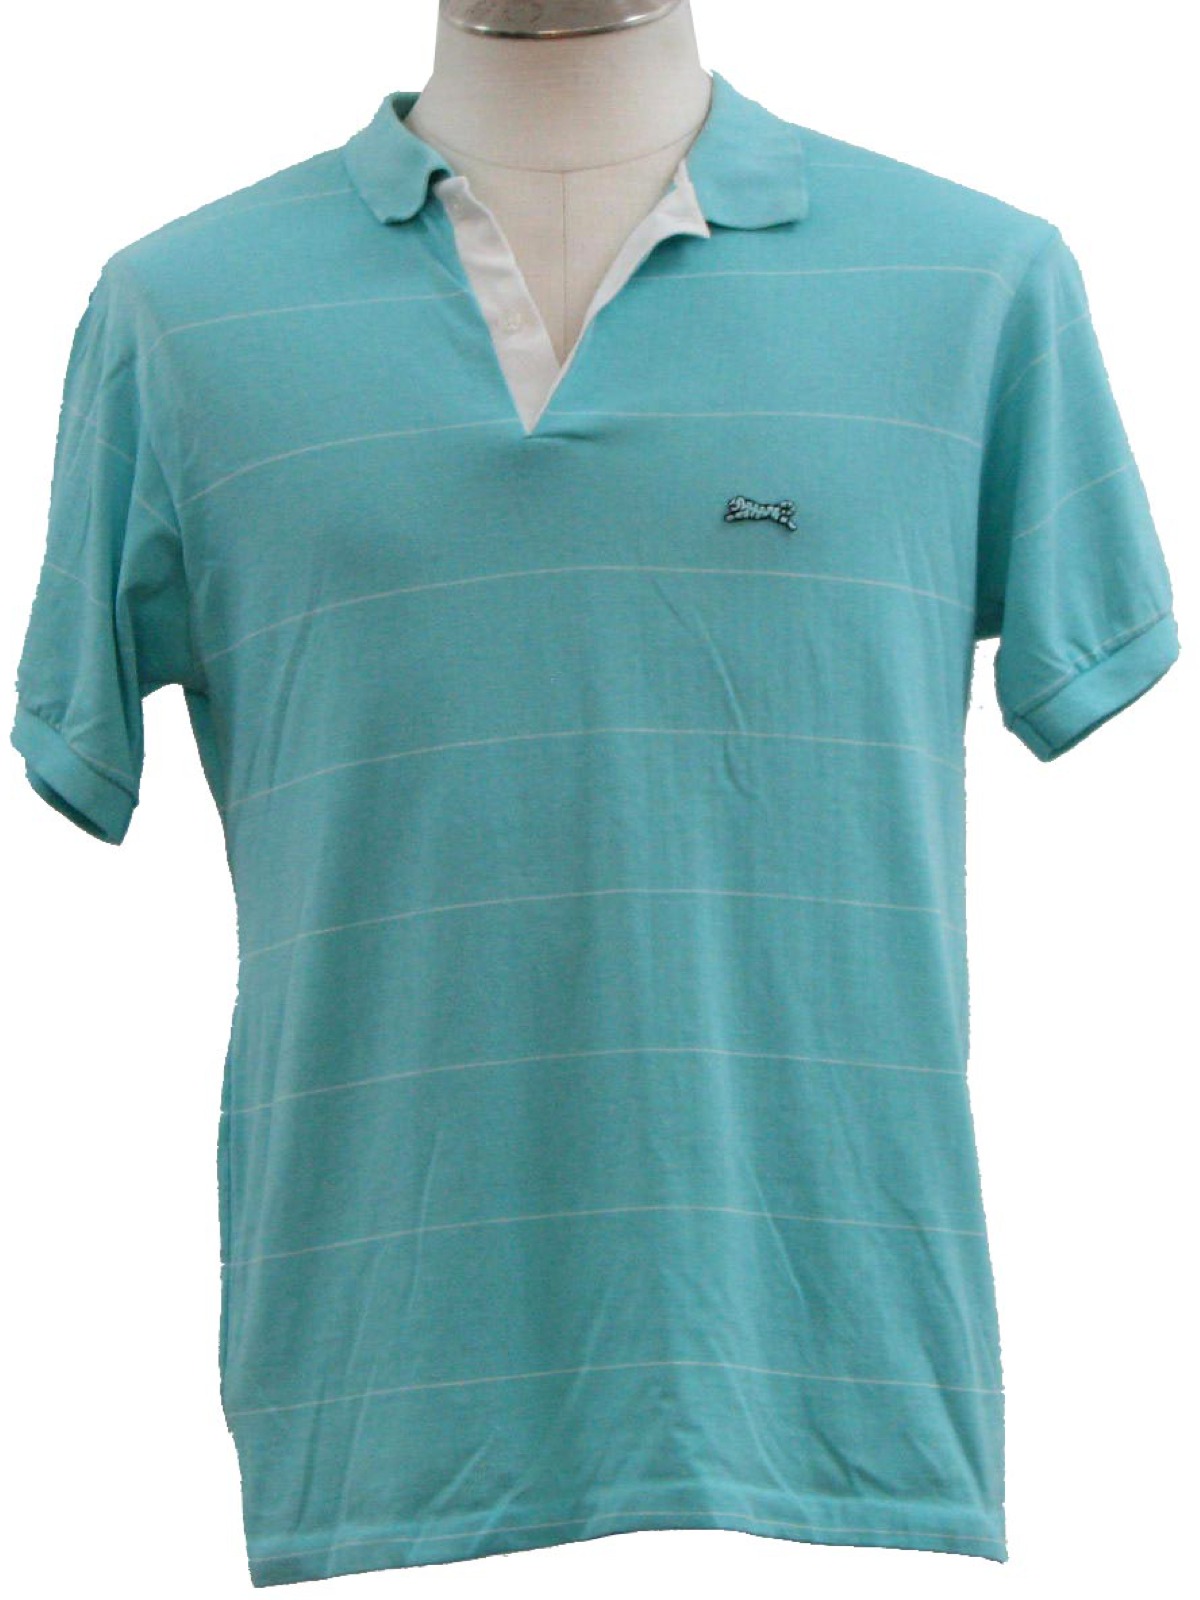 Men's Vintage Athletic Polo Shirt in Enamel Green